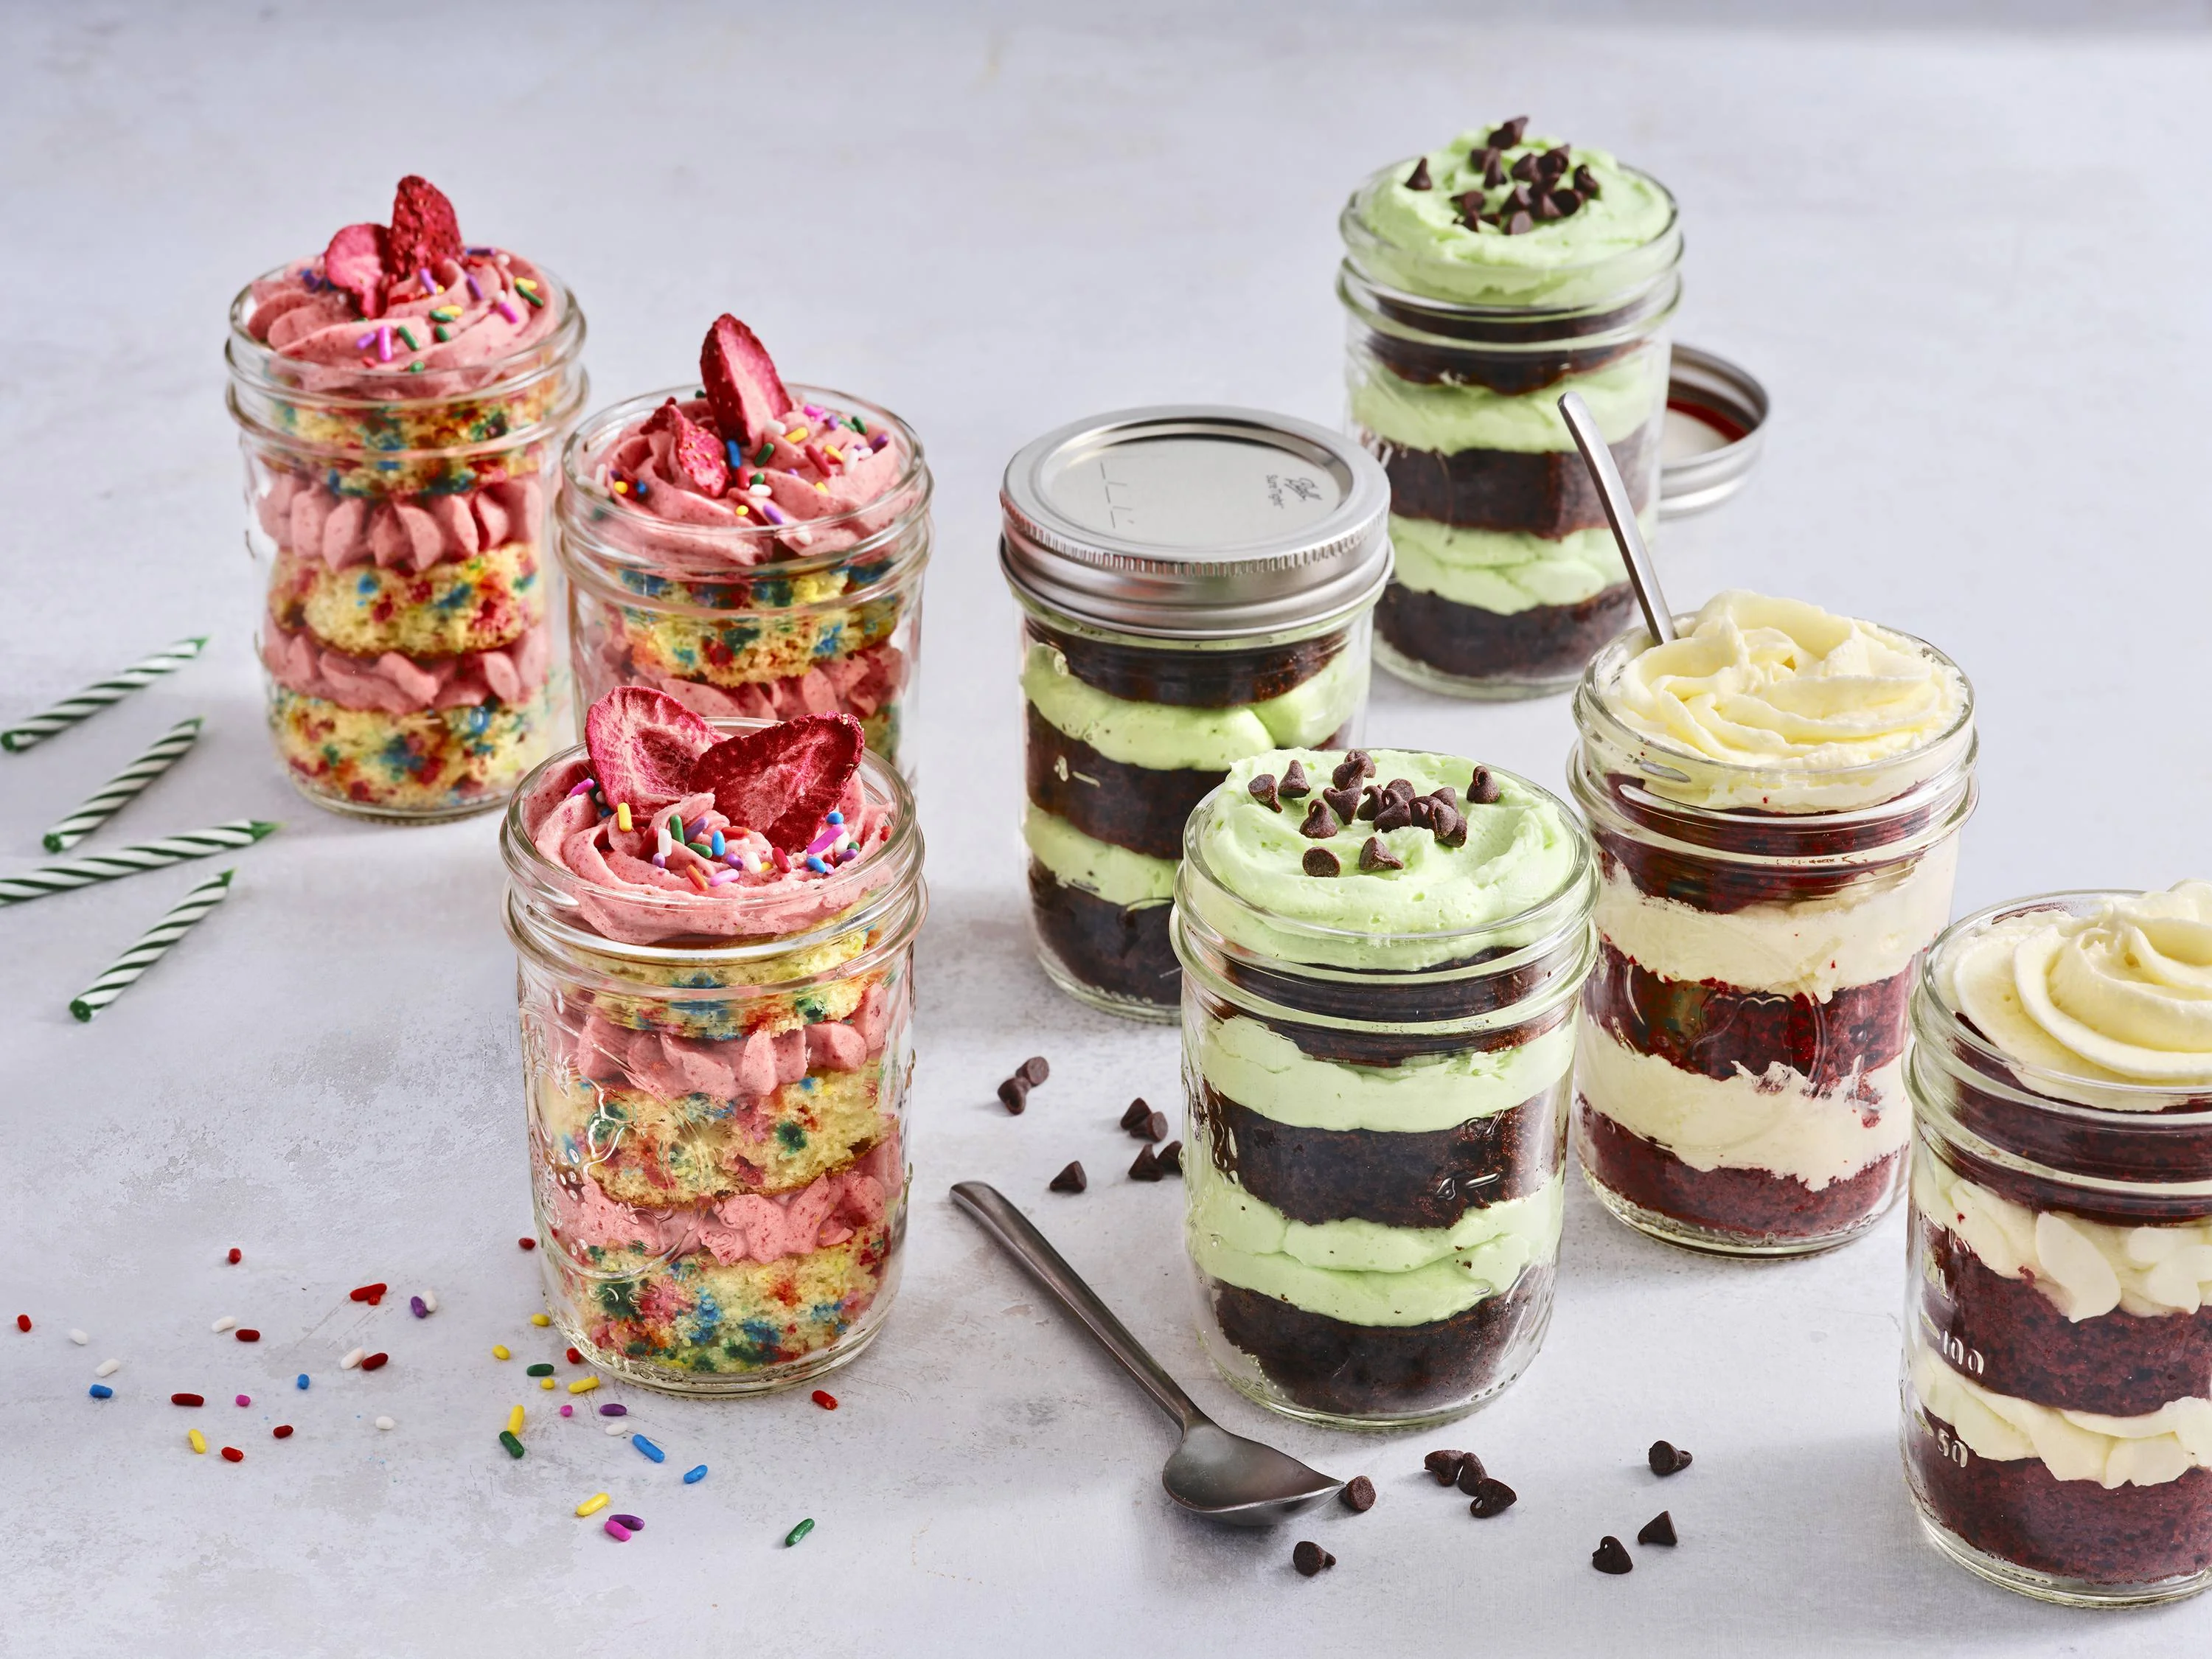 https://www.savoryonline.com/app/uploads/recipes/239884/mint-chocolate-chip-cake-in-jars.jpg